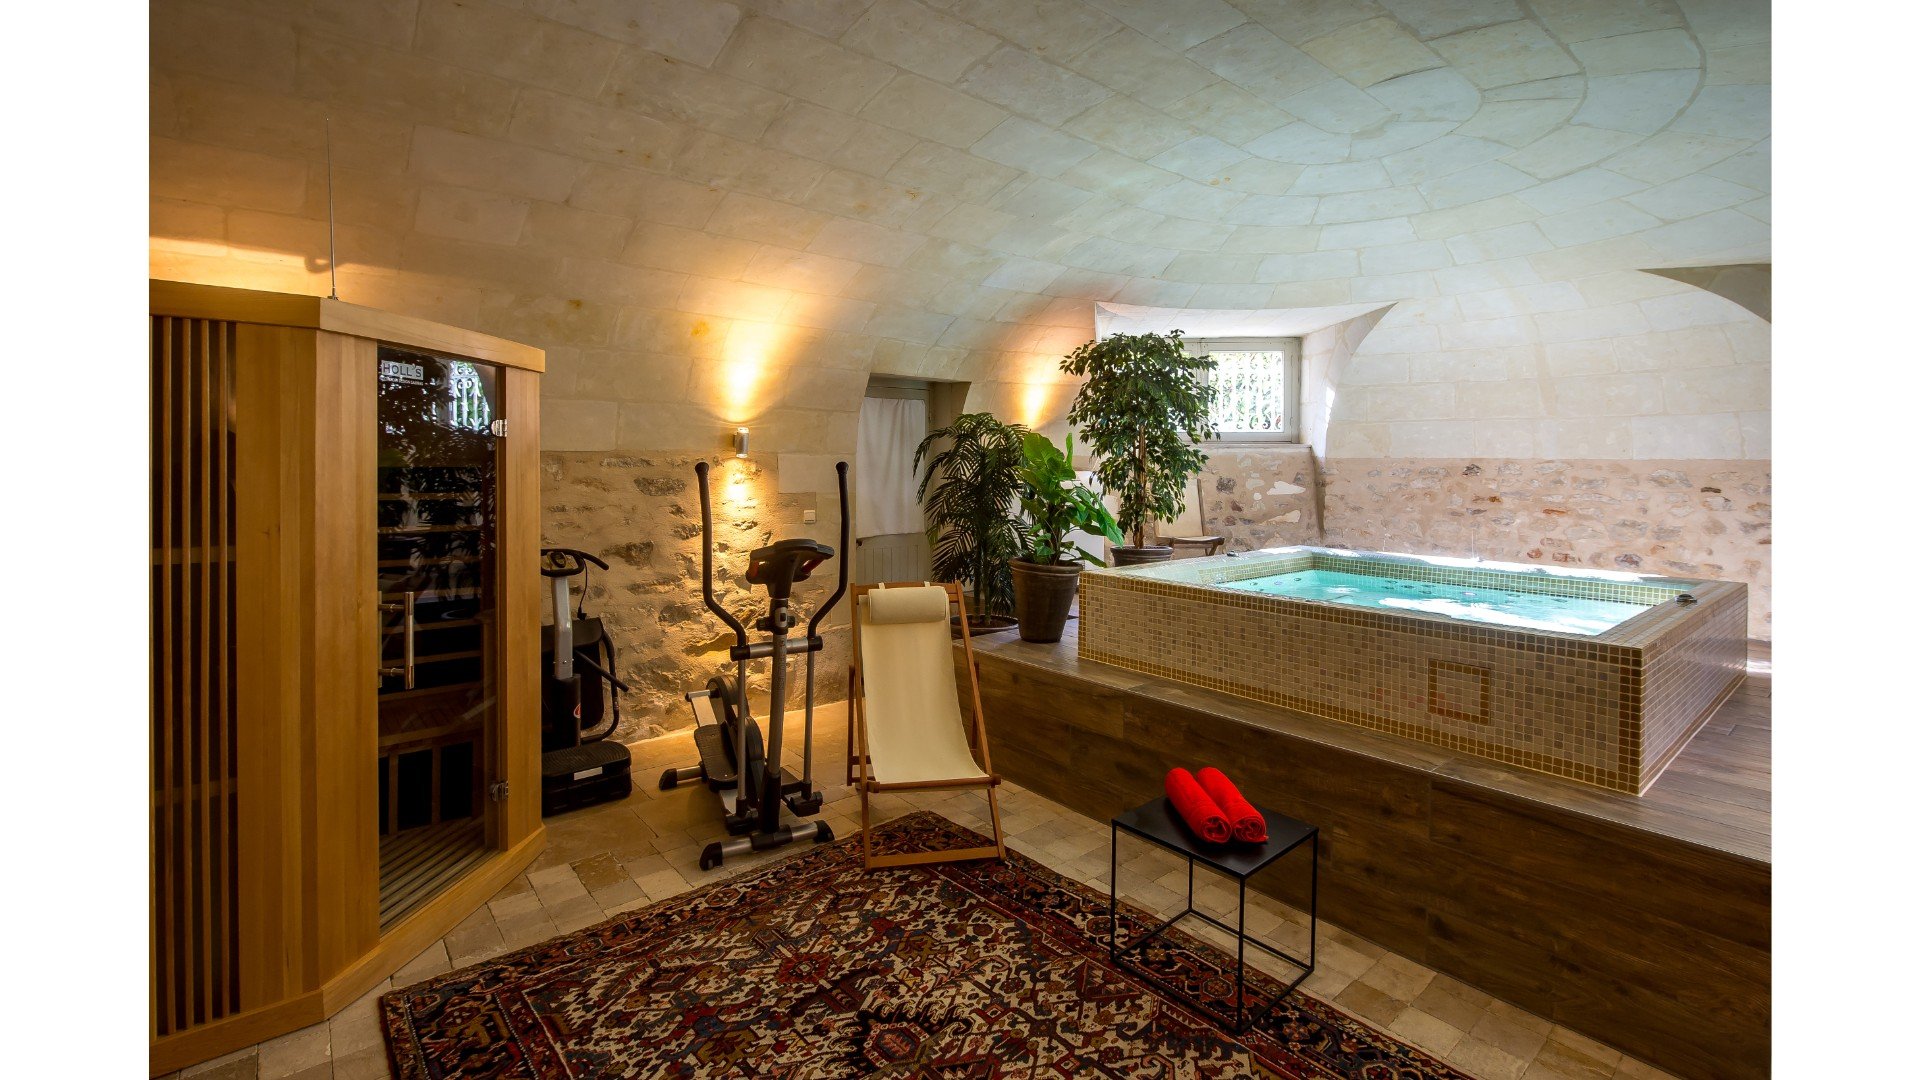 127/piscine  spa/Spa sauna Chateau de Verrieres.jpg